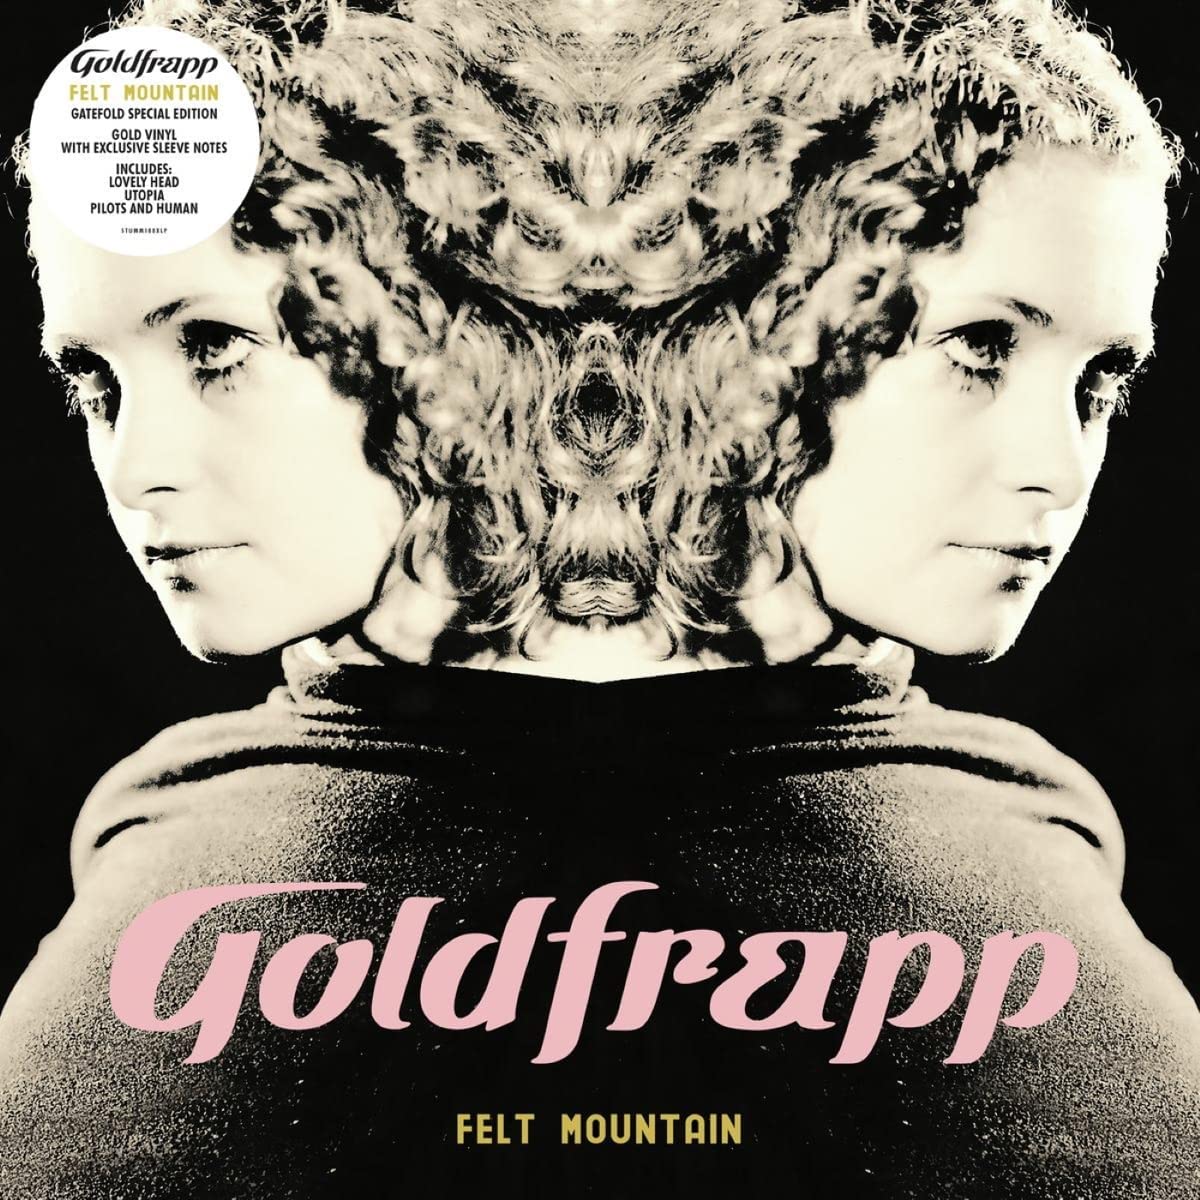 Goldfrapp / Felt Mountain gold vinyl reissue